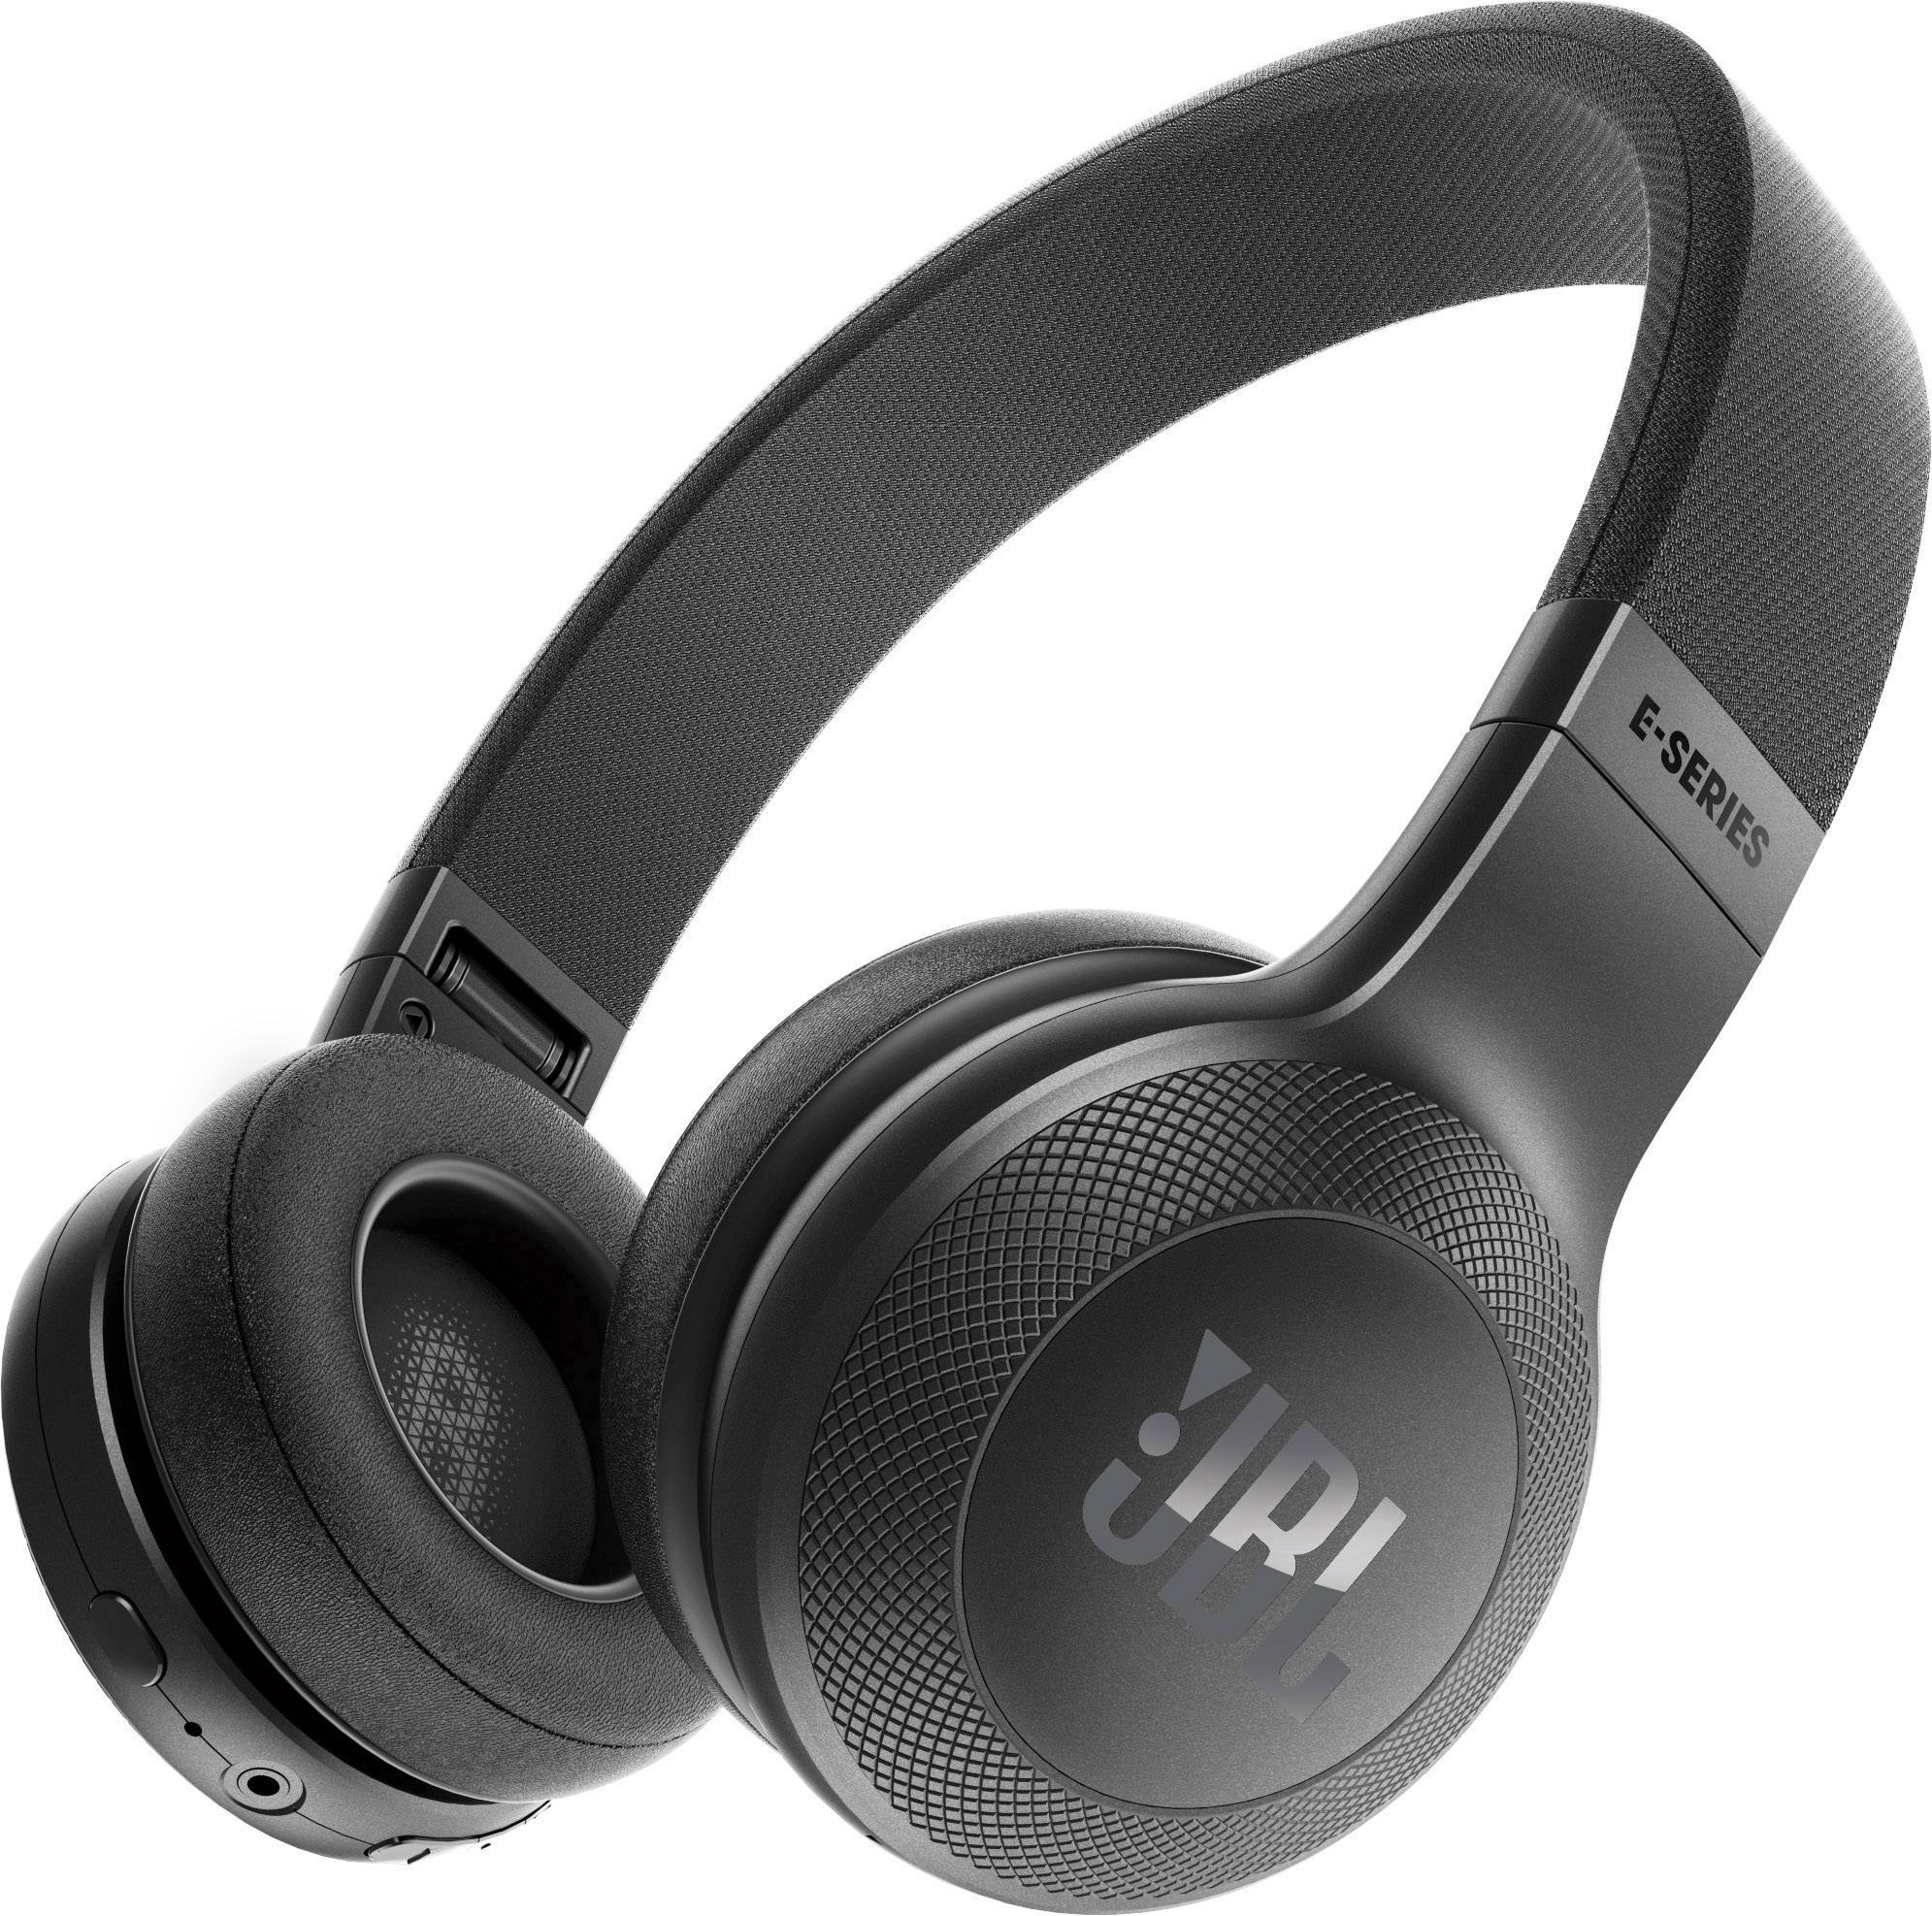 Tigge syg sne hvid JBL Harman E45BT On-ear headphones Bluetooth® (1075101), Corded (1075100)  Black Foldable, Headset | Conrad.com